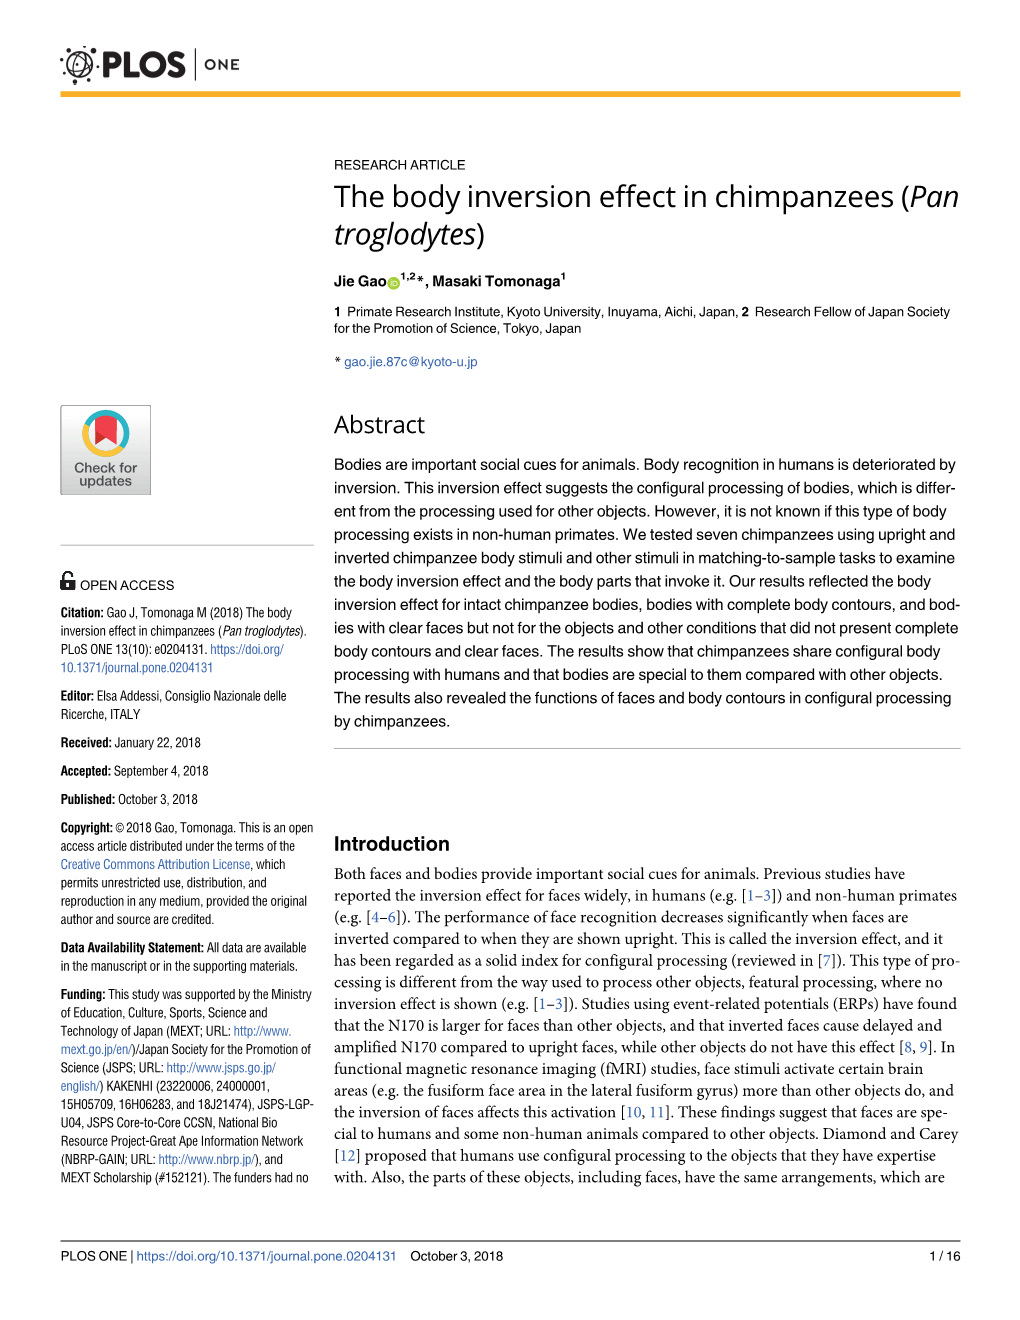 The Body Inversion Effect in Chimpanzees (Pan Troglodytes)